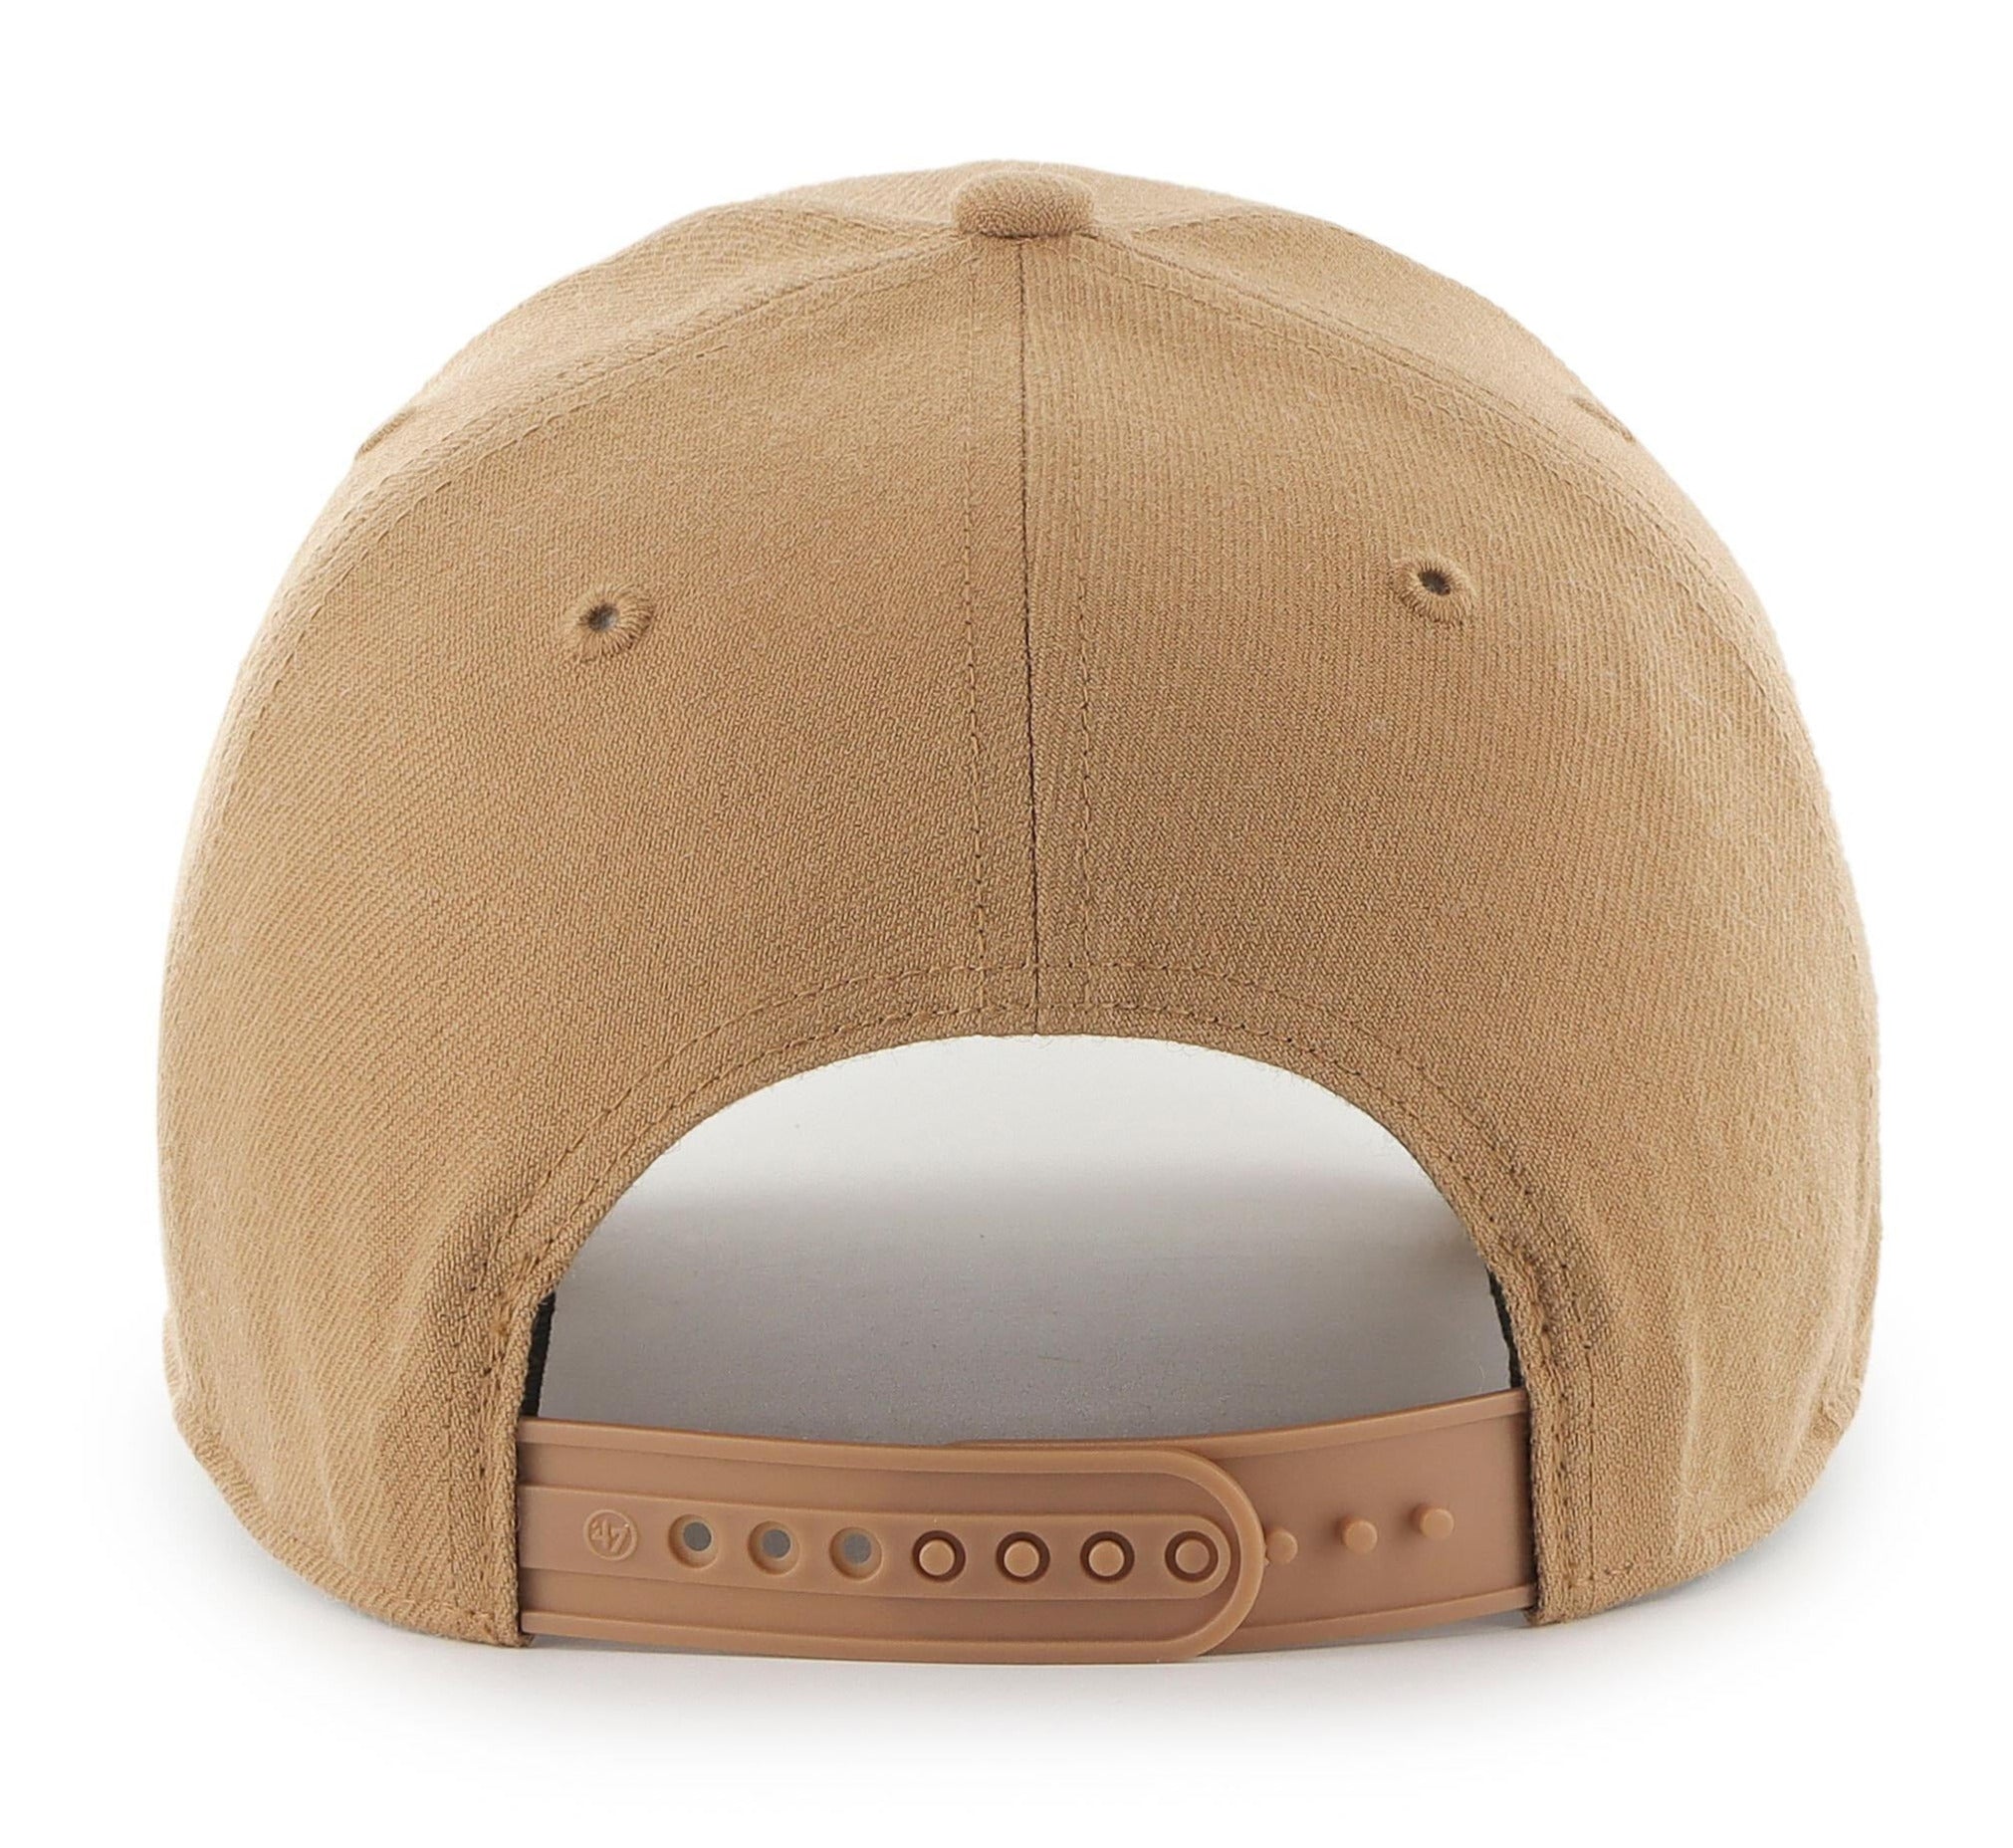 47 Brand / Men's San Diego Padres Camo Branson MVP Adjustable Hat